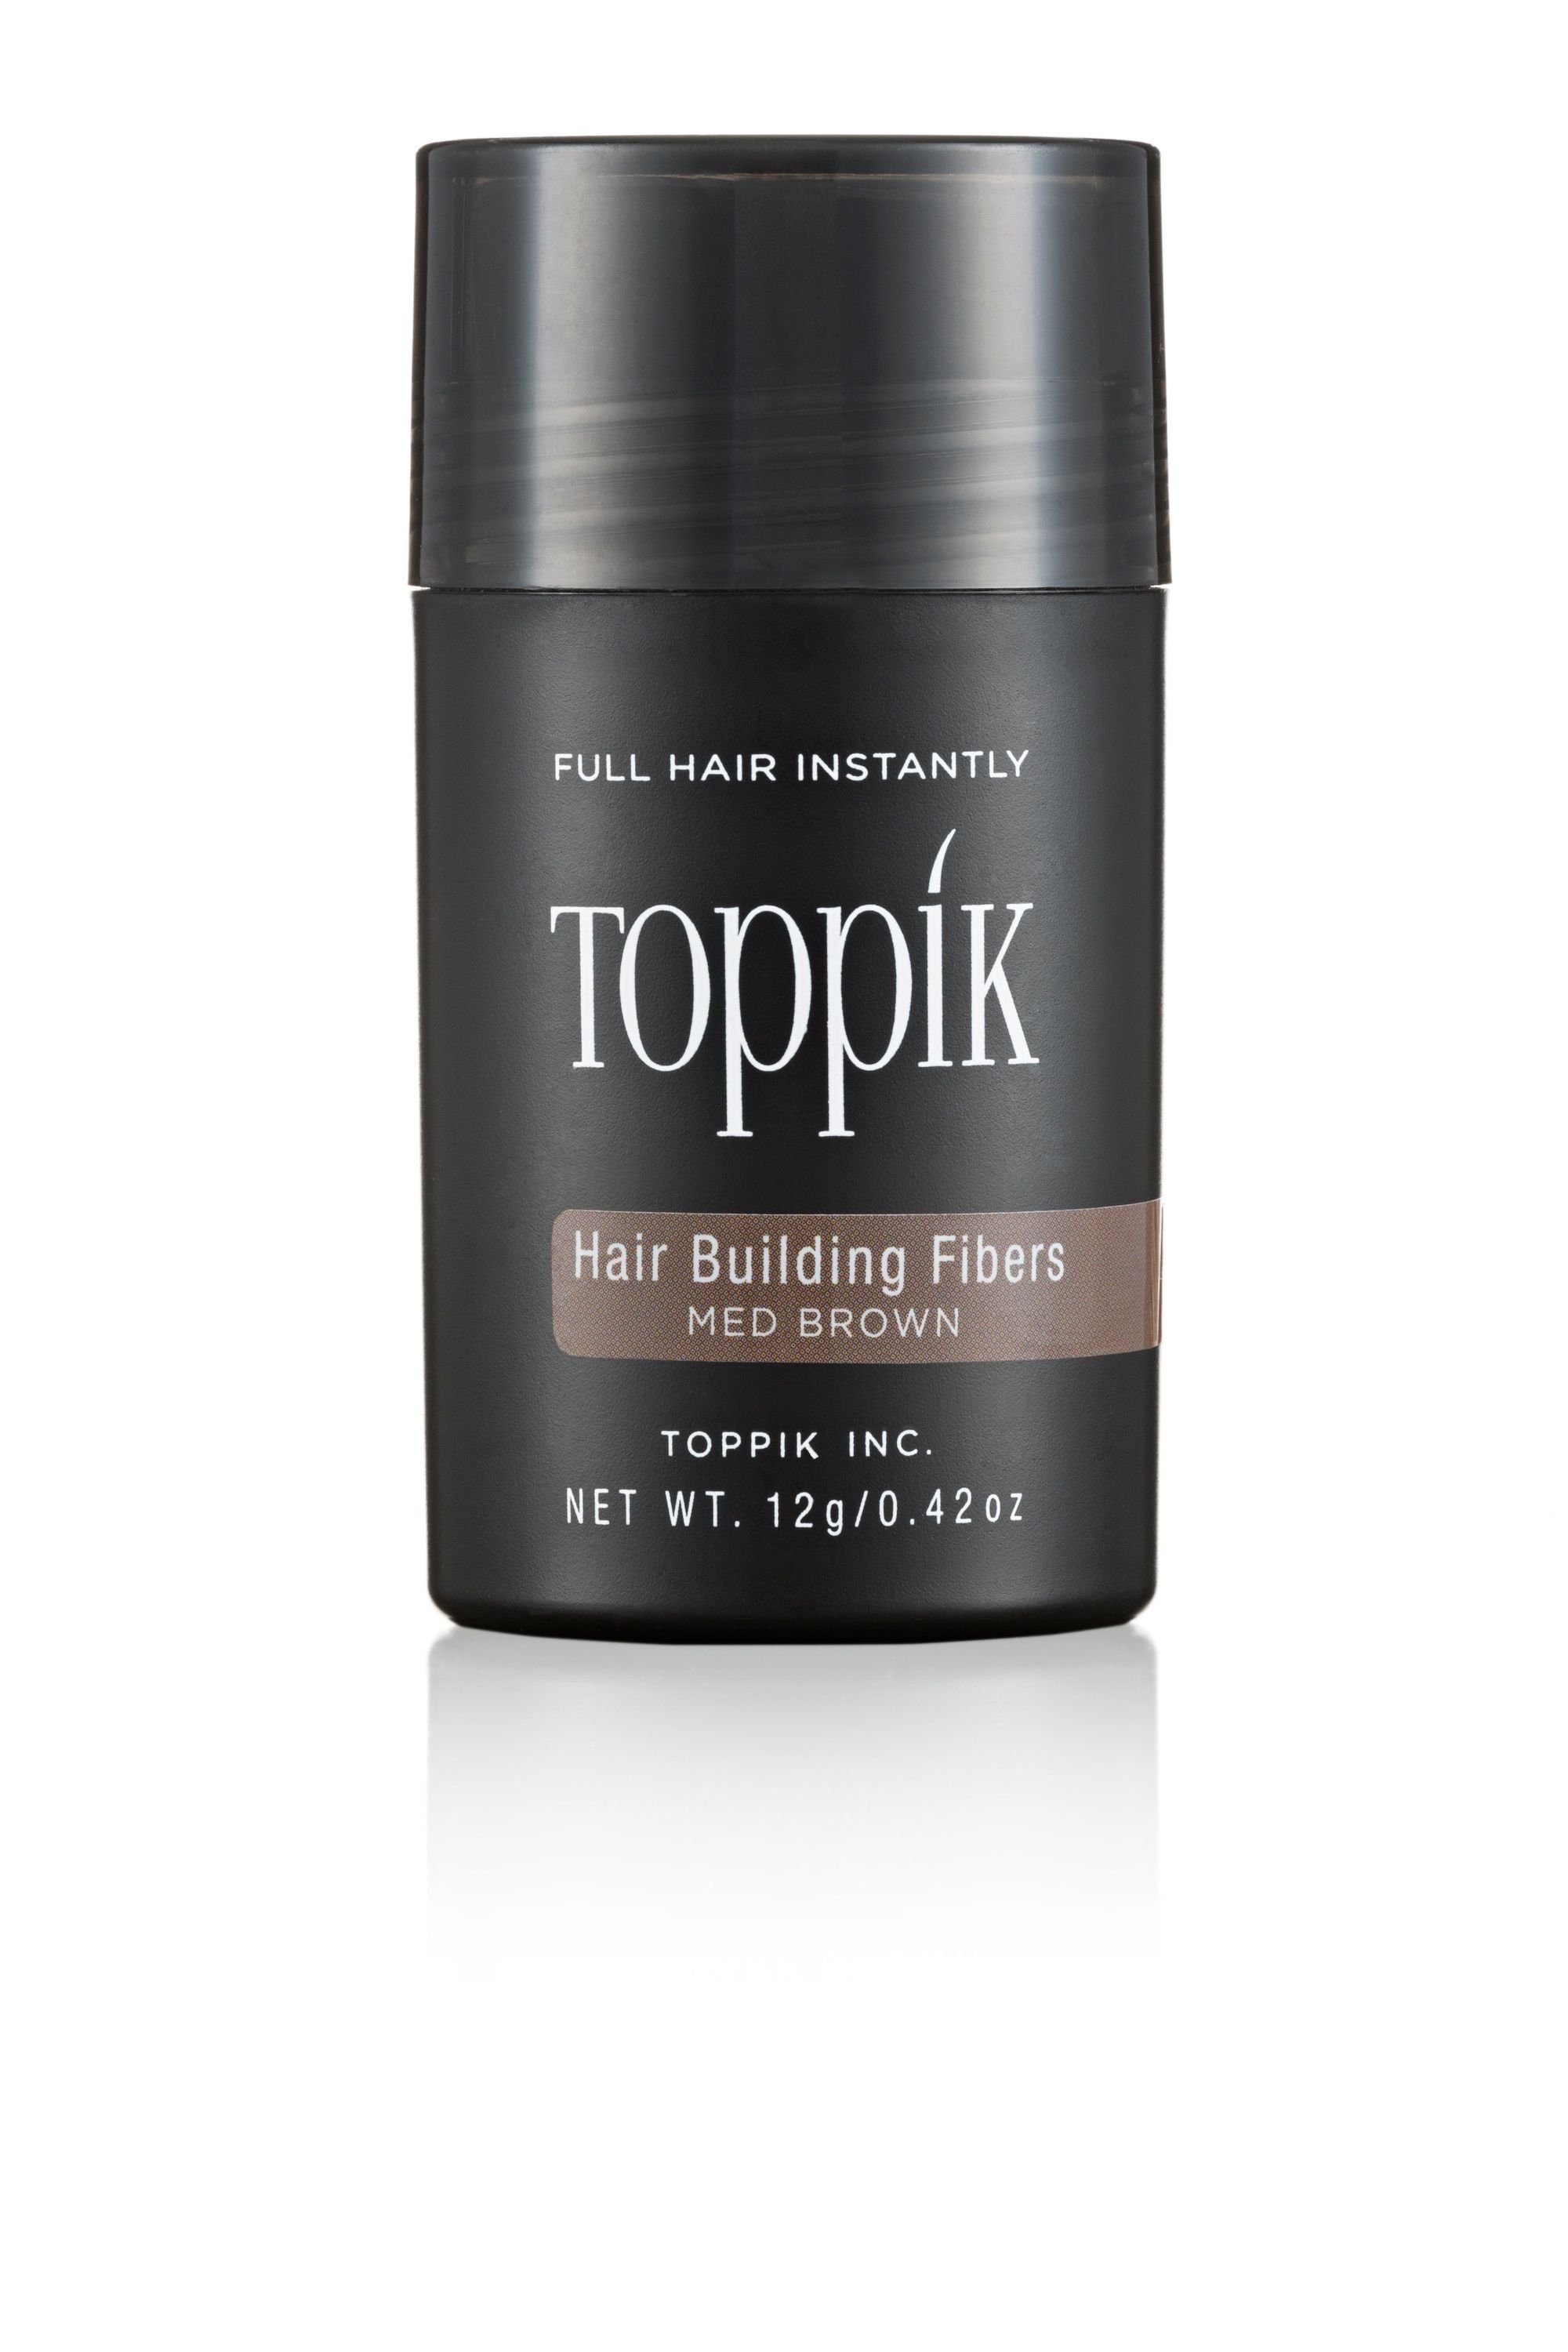 TOPPIK Haarstyling-Set Angebot: TOPPIK 12 Dunkelbraun Puder, Haarfasern, Fibers g., Hair